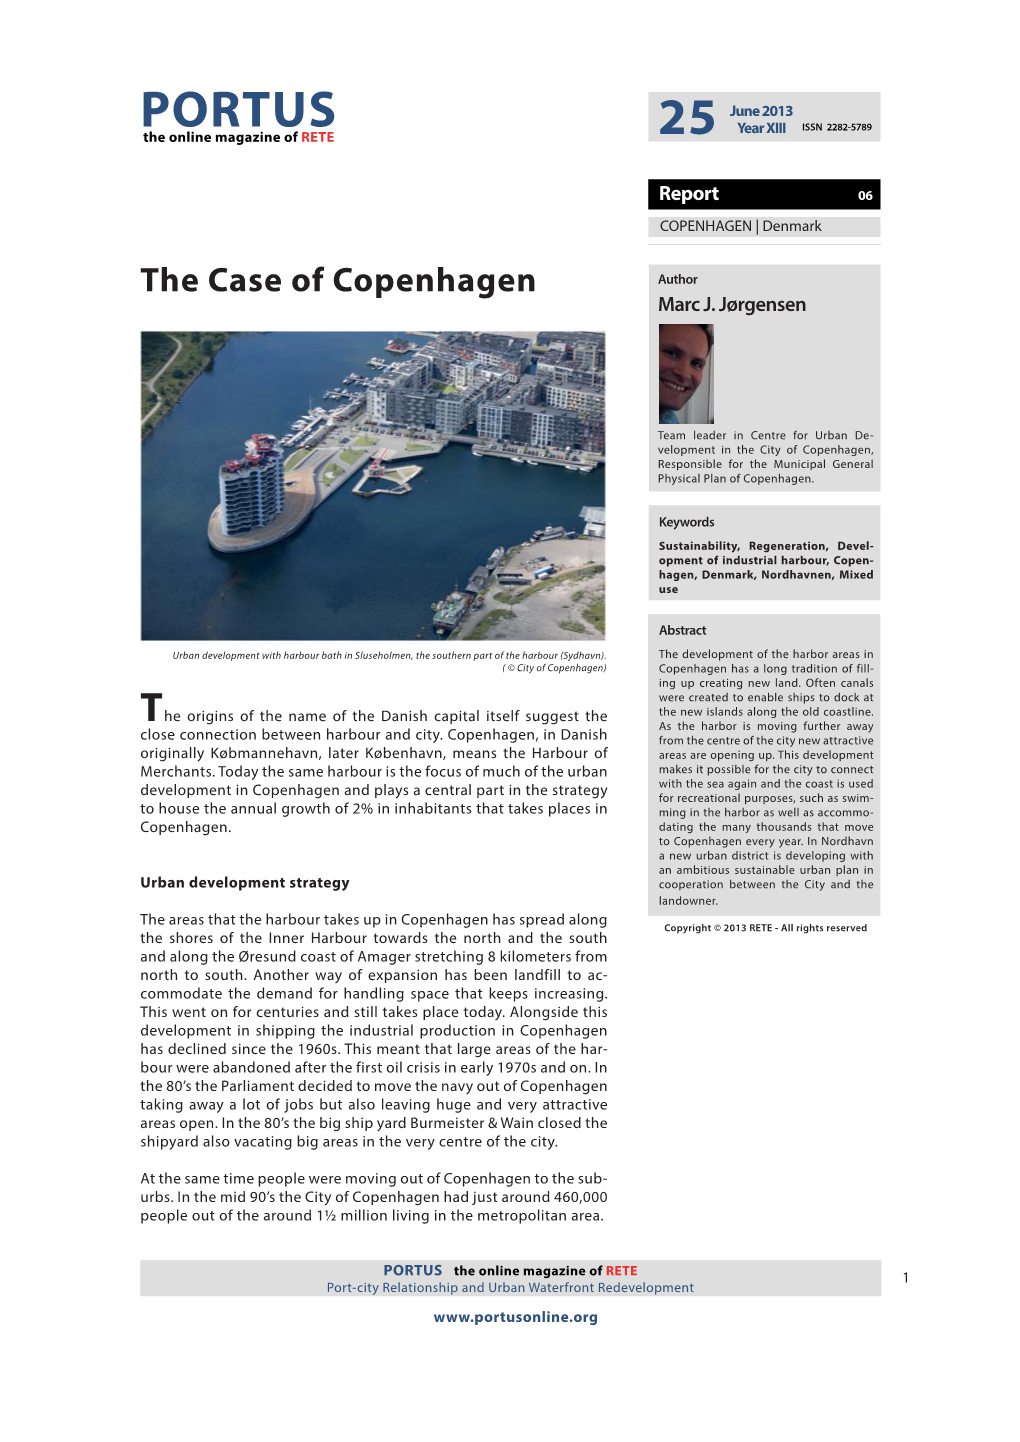 The Case of Copenhagen Marc J Jorgensen